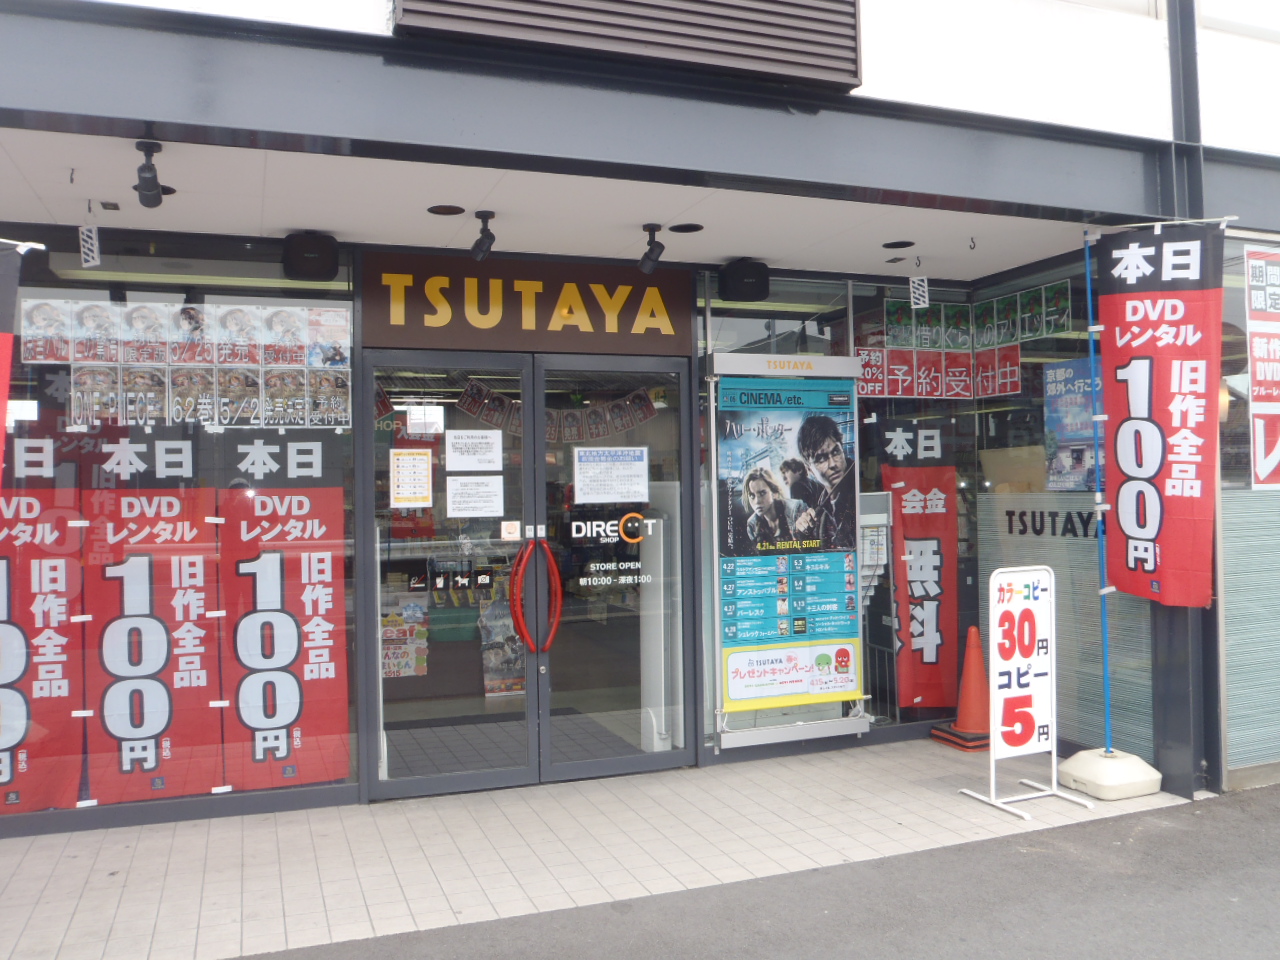 Rental video. TSUTAYA Tsutaya Kodo shop 2230m up (video rental)